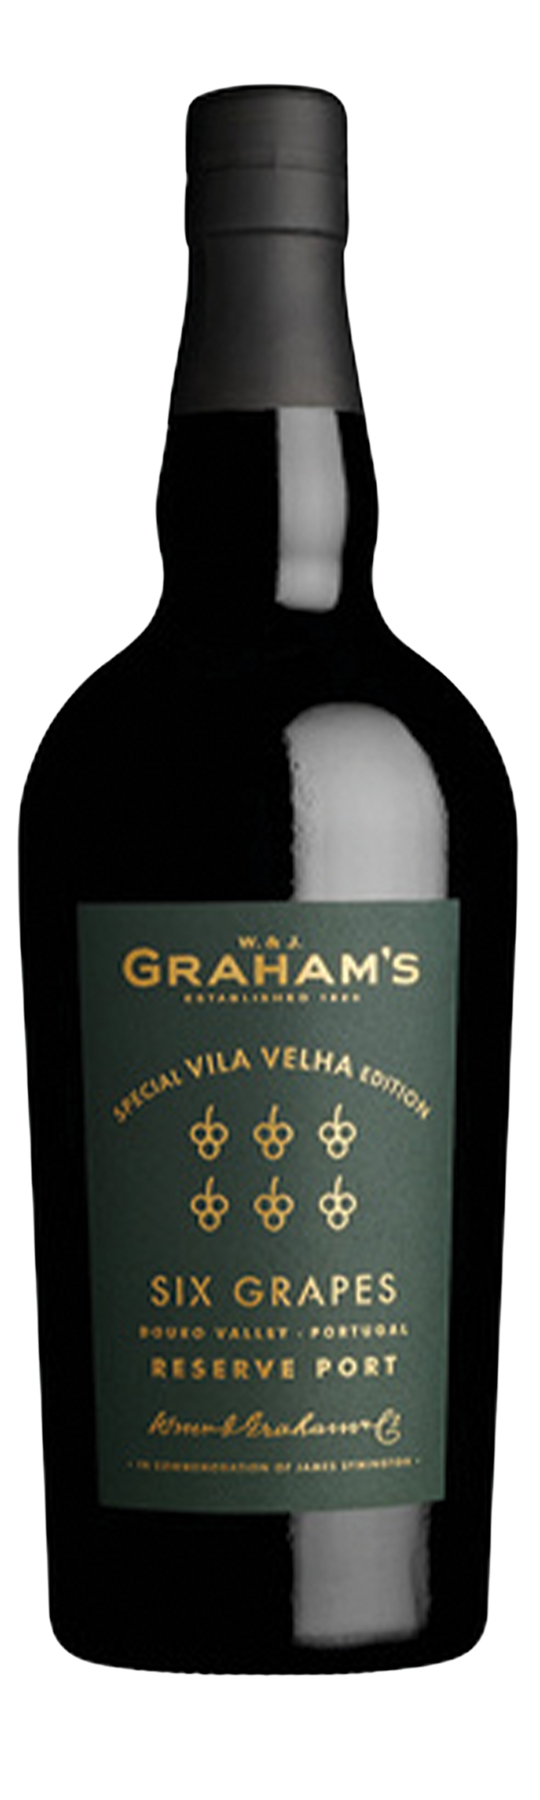 Graham's Six Grapes Vila Velha 20% 75cl Porto